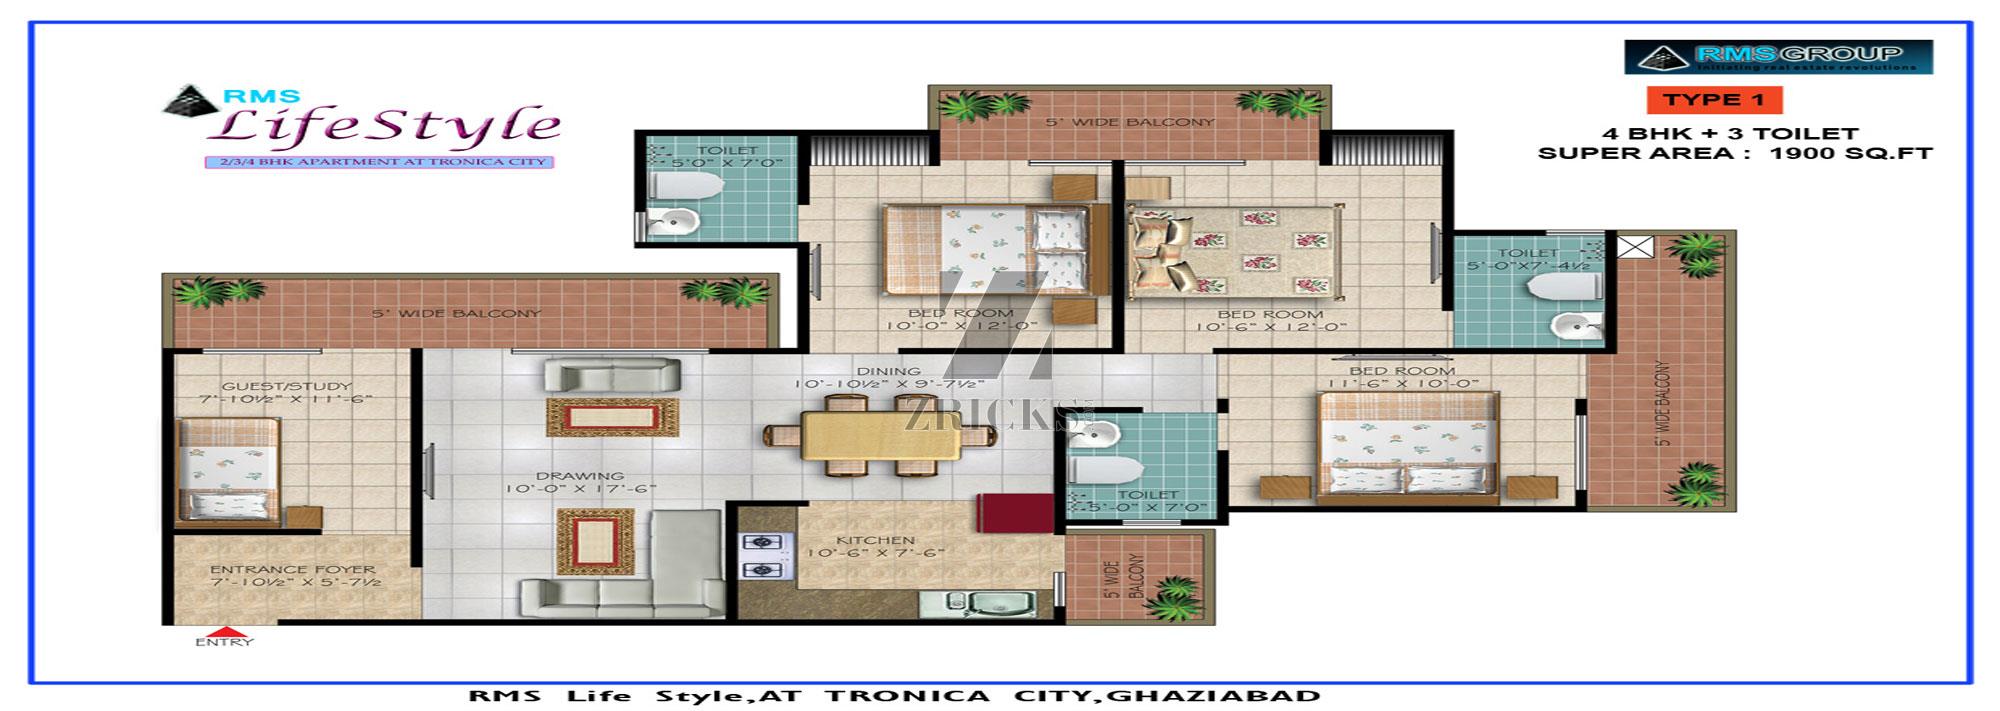 RMS Lifestyle Floor Plan